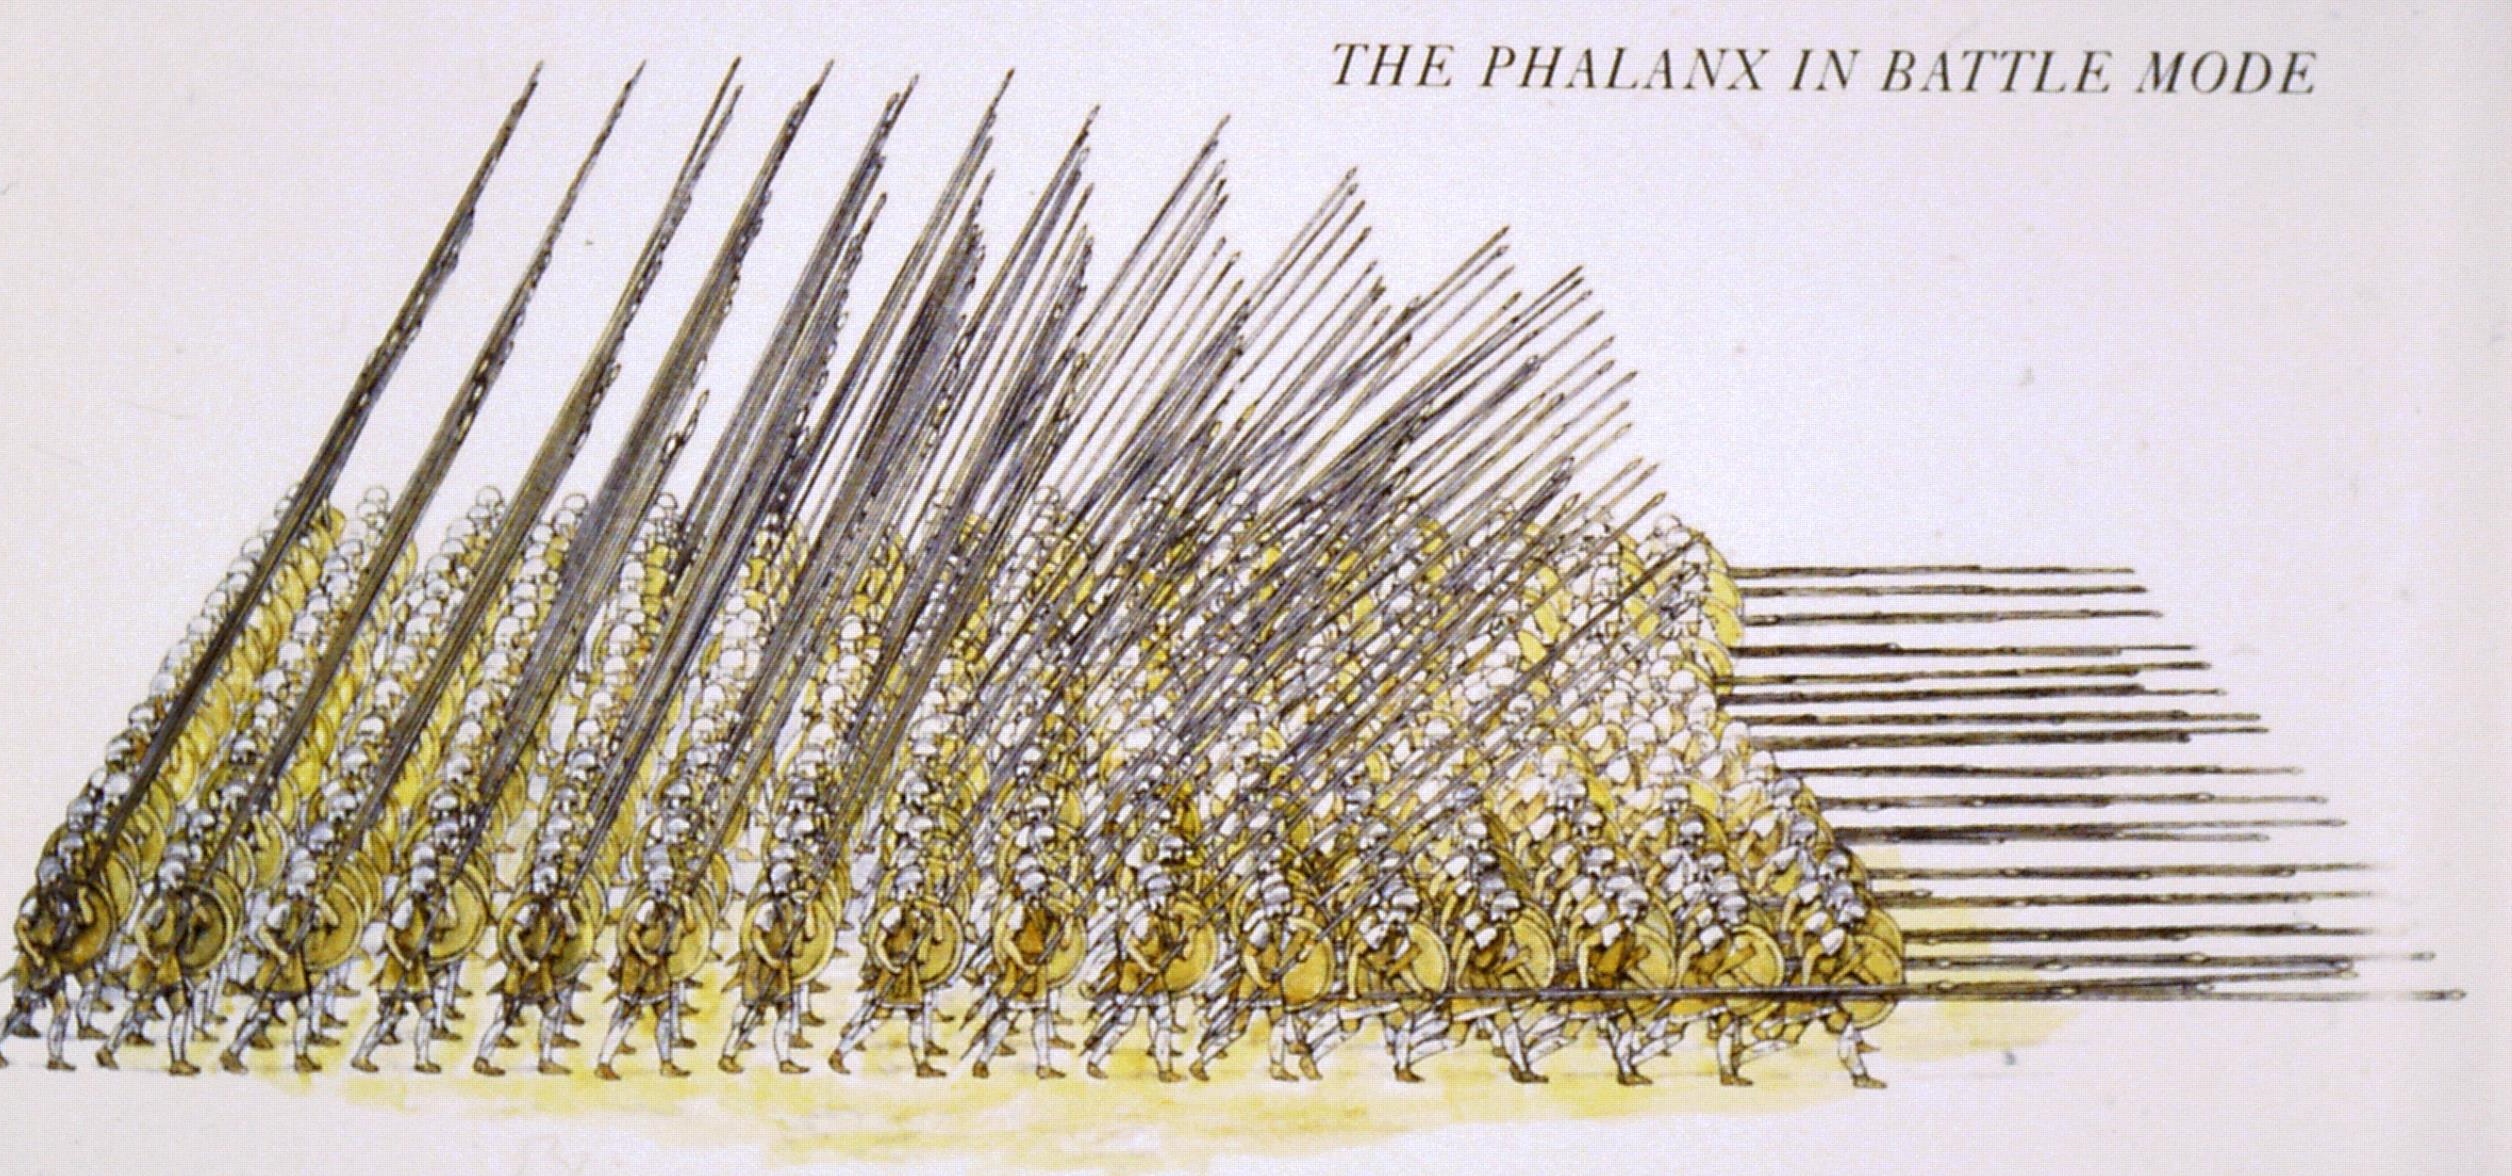 macedonian phalanx formation